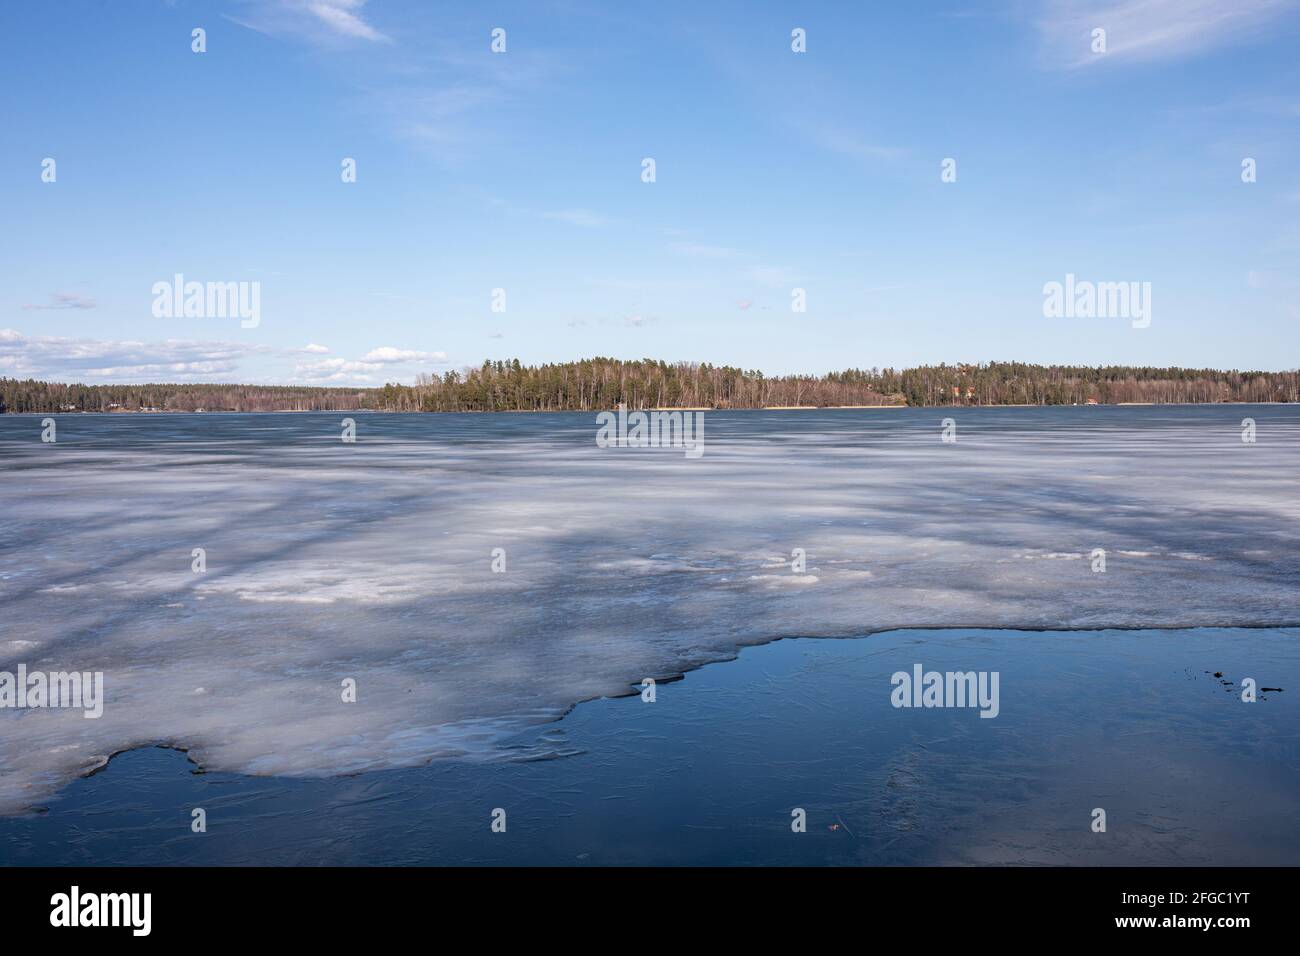 Lake Vitträsk partly covered in ice in Kirkkonummi, Finland Stock Photo